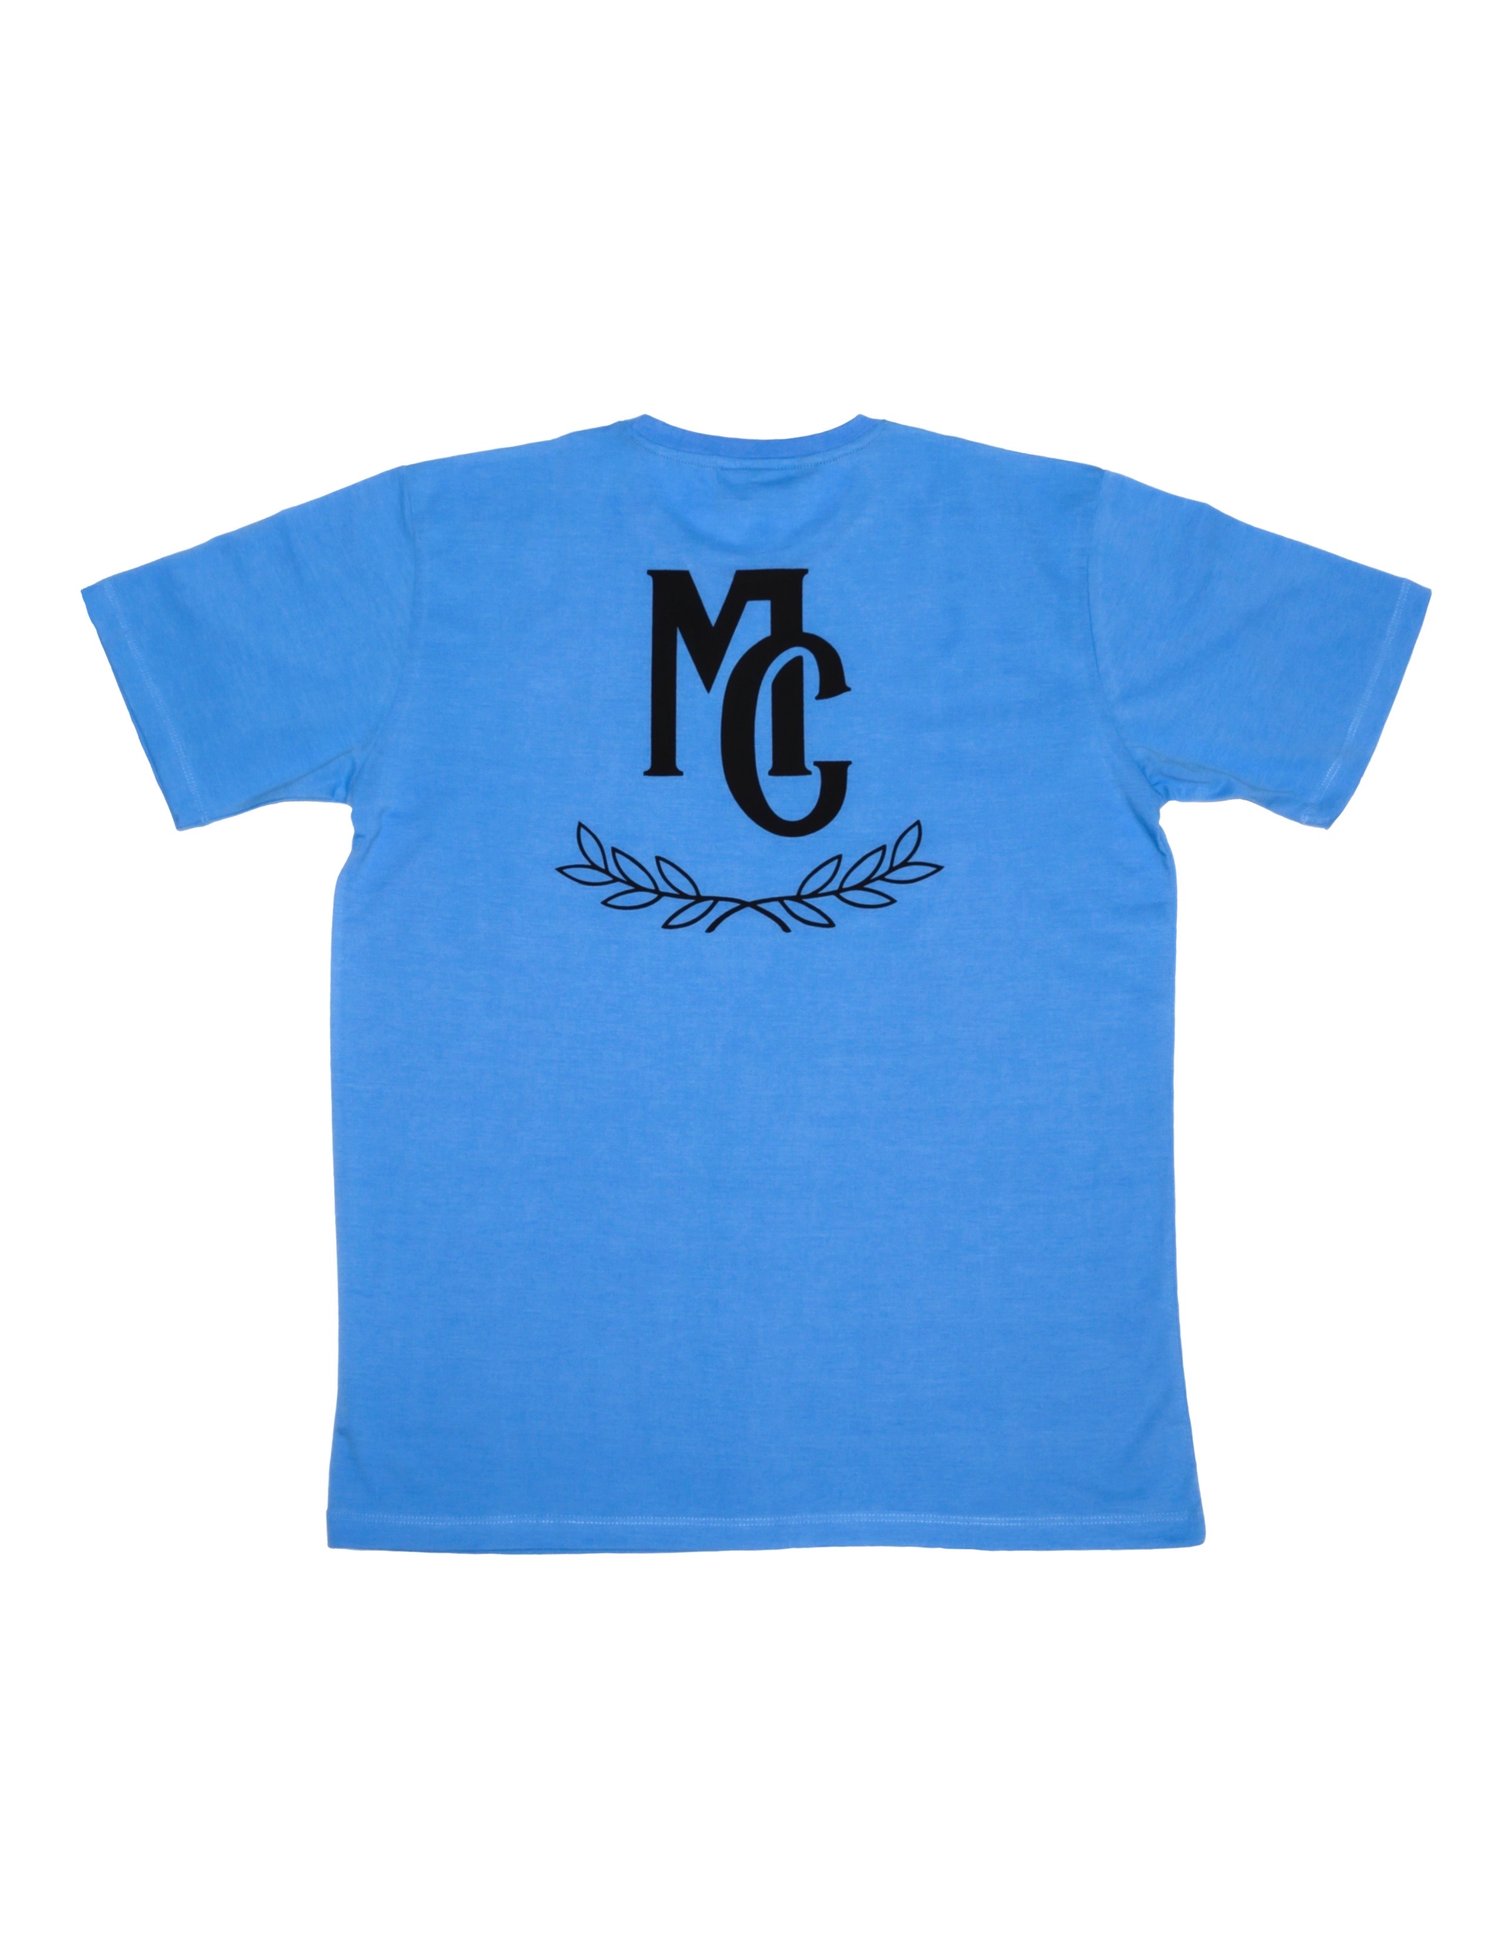 Image of “MC” Black On Baby Blue 